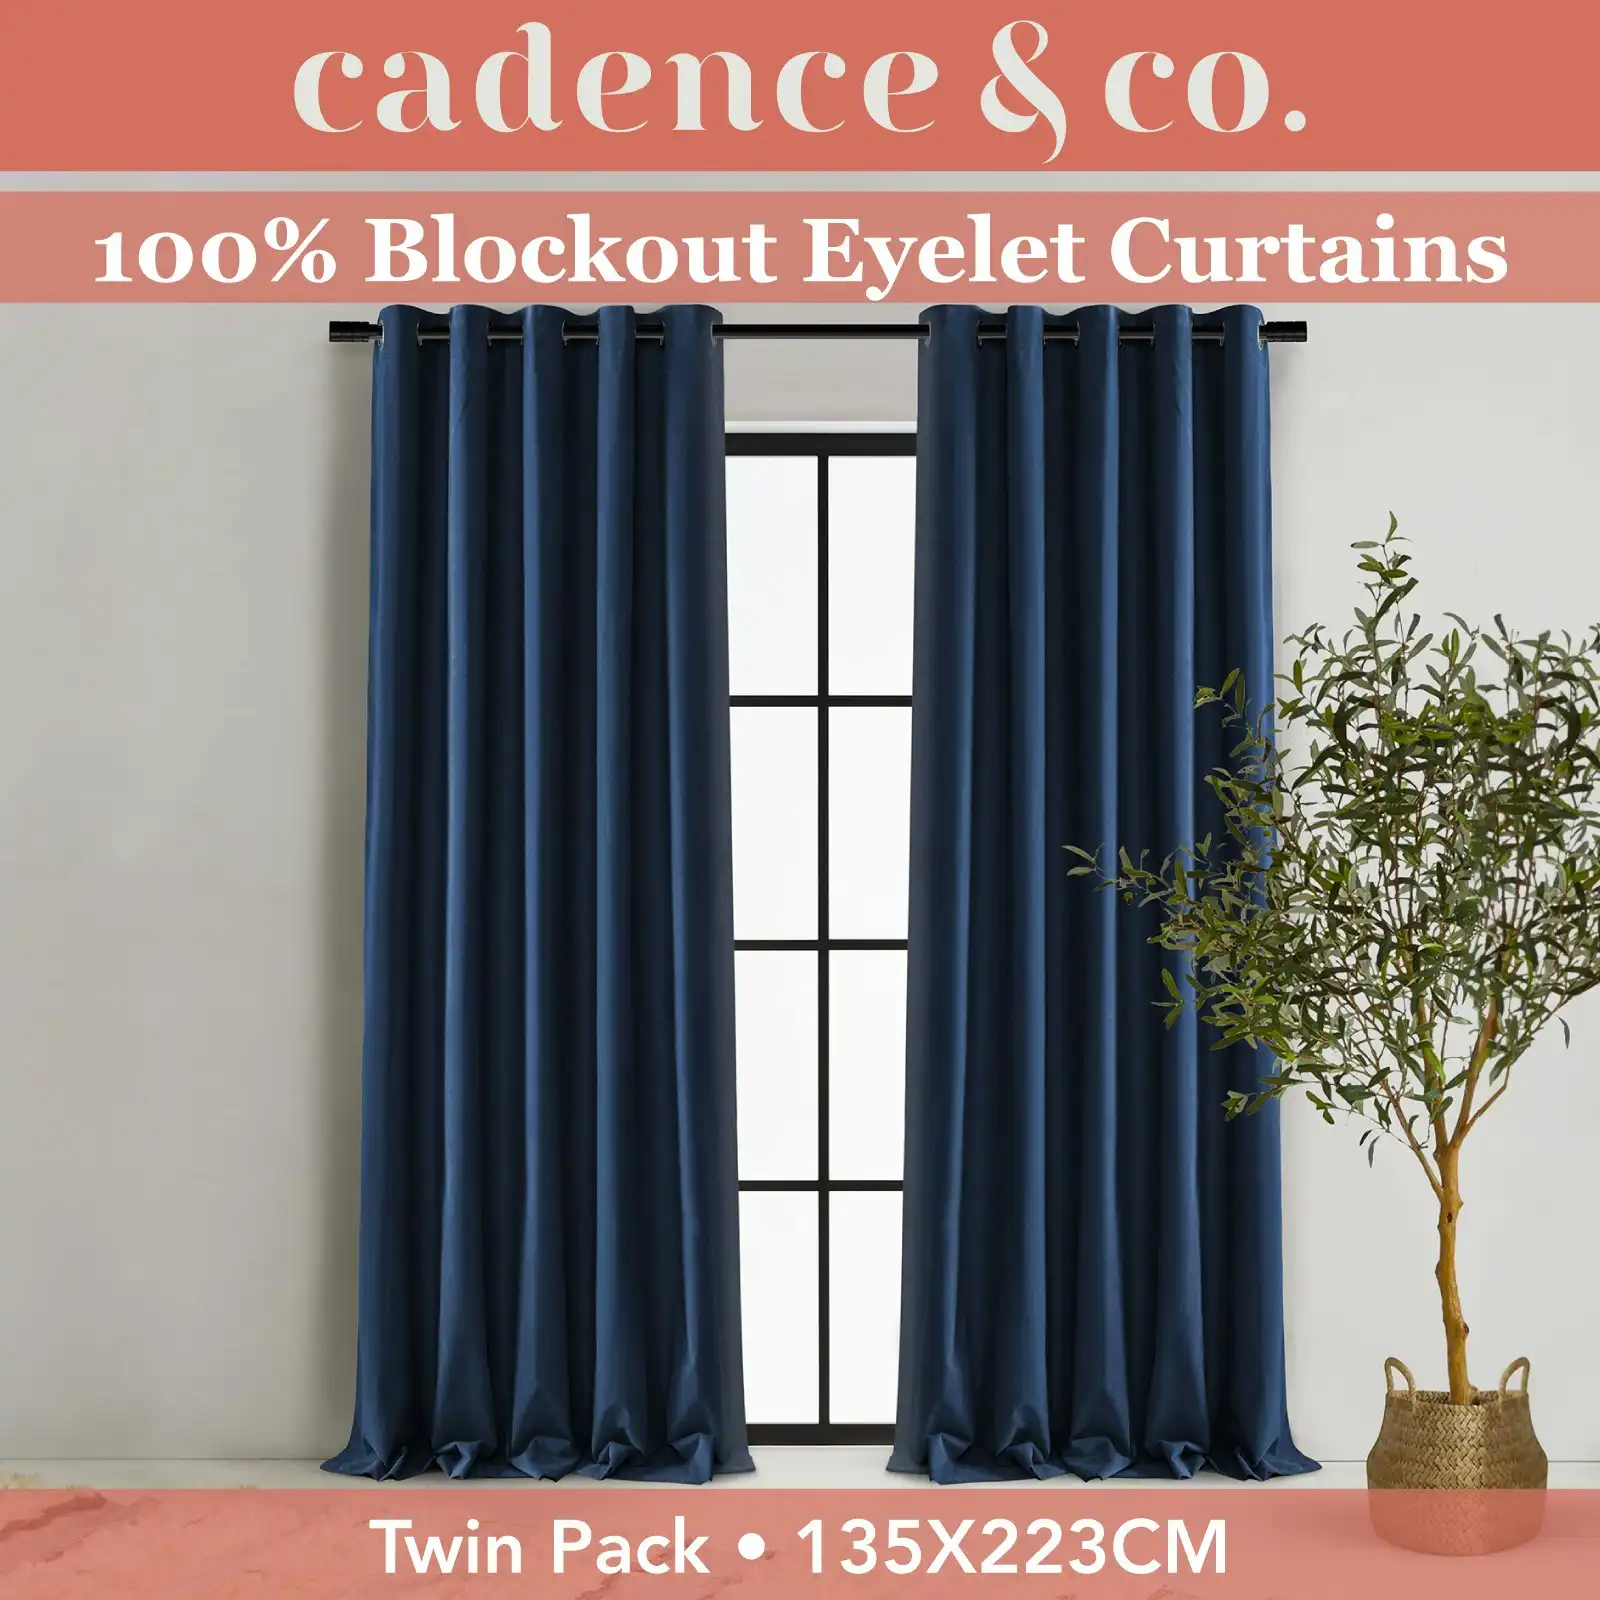 Cadence & Co. Byron Matte Velvet 100% Blockout Eyelet Curtains Twin Pack Ocean Blue 135x223cm